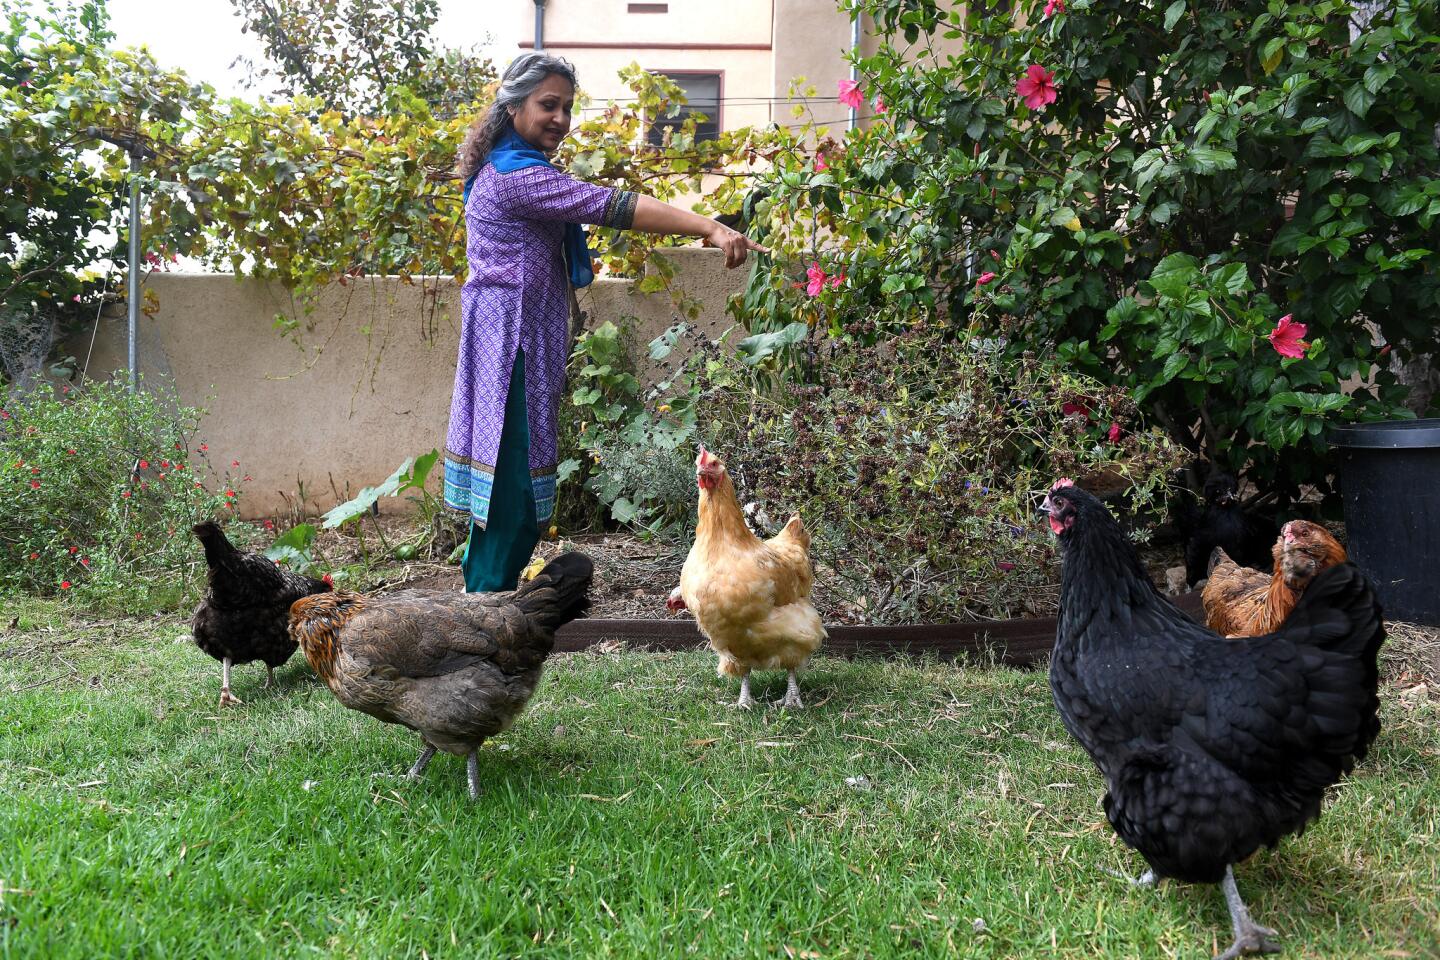 The chickens roam free in Choi Chatterjee's Altadena backyard.